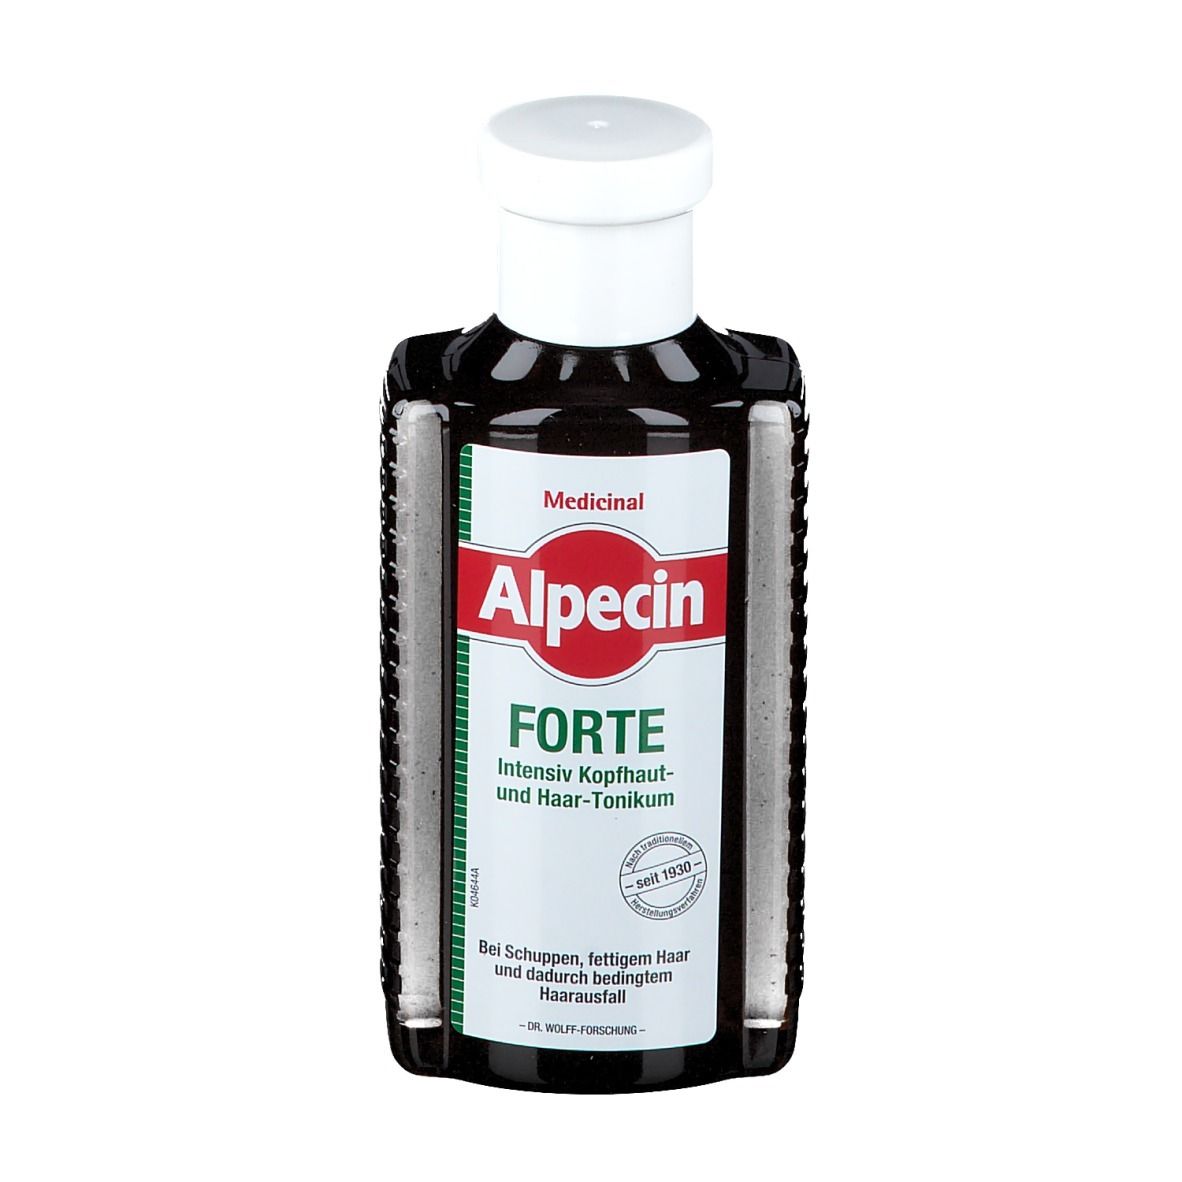 Image of Alpecin Medicinal FORTE Intensiv Kopfhaut- und Haar-Tonikum